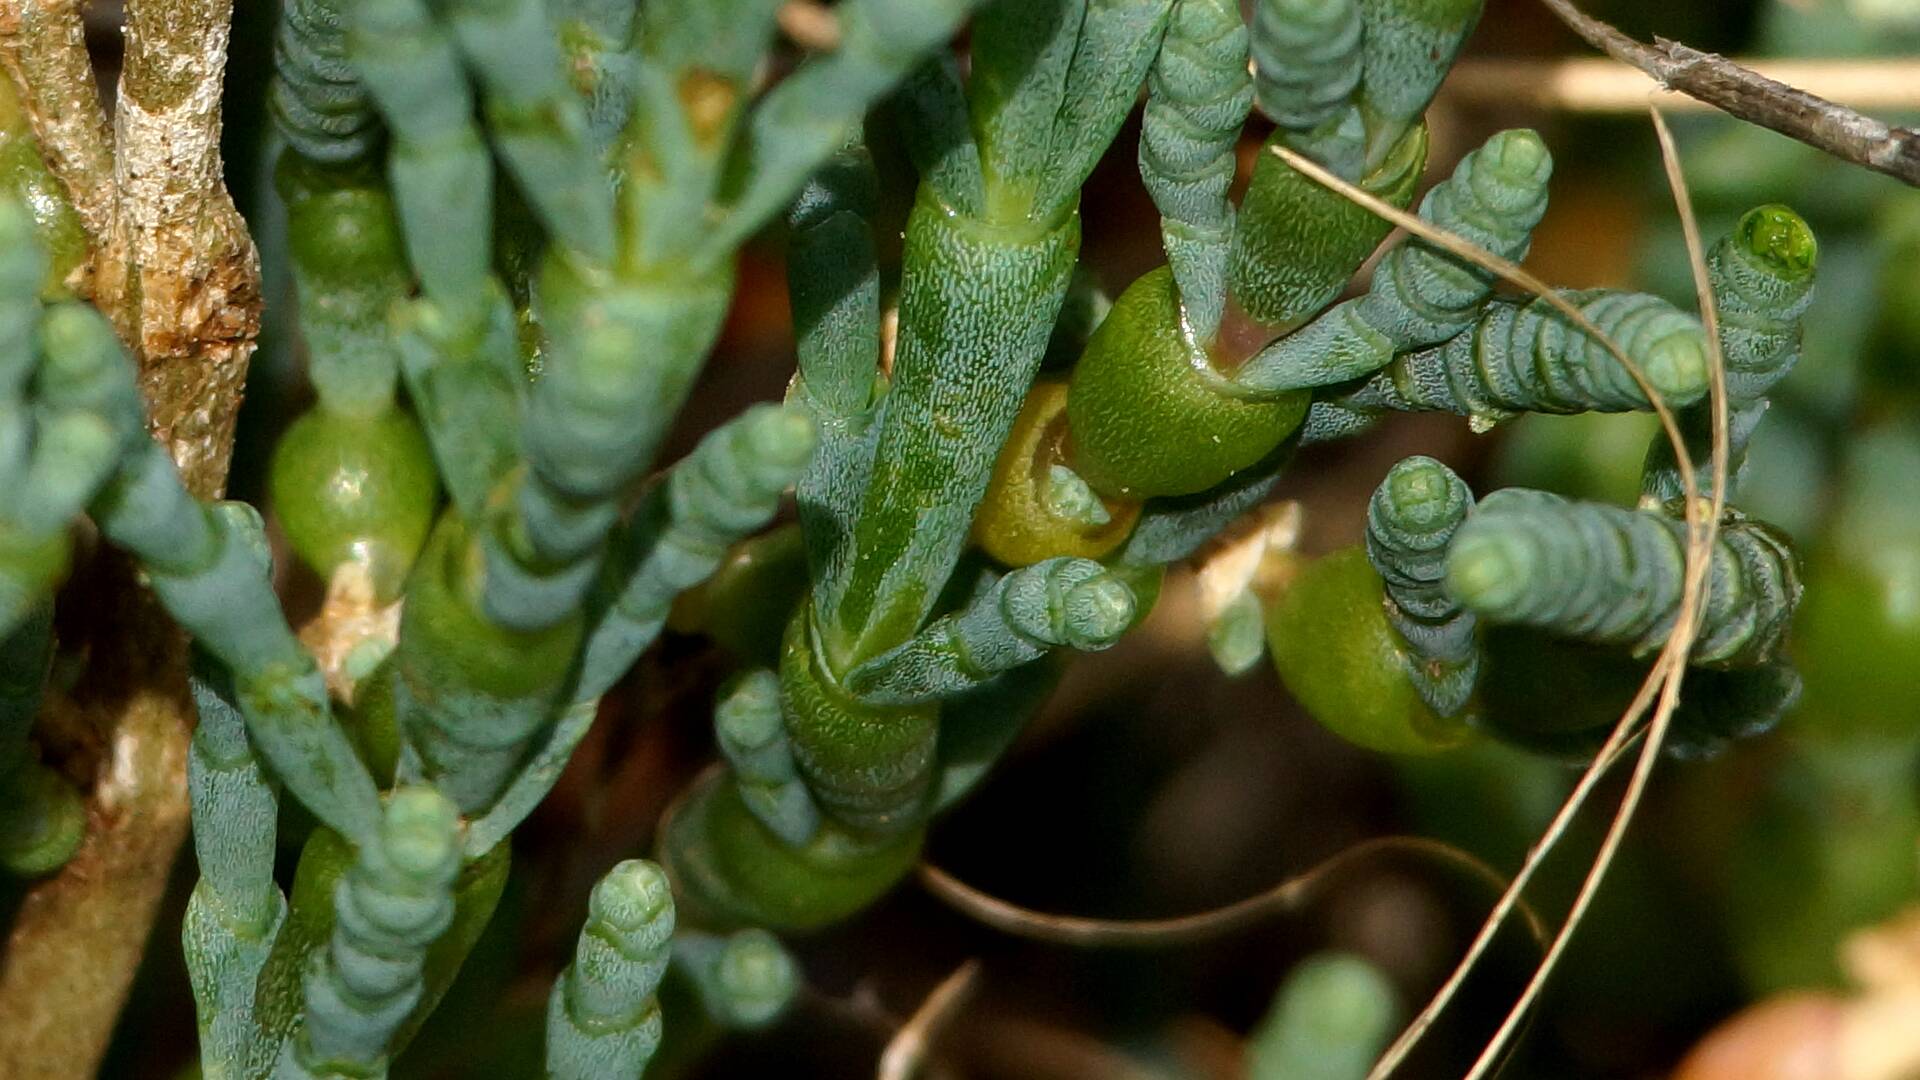 Samphire (Tecticornia sp)